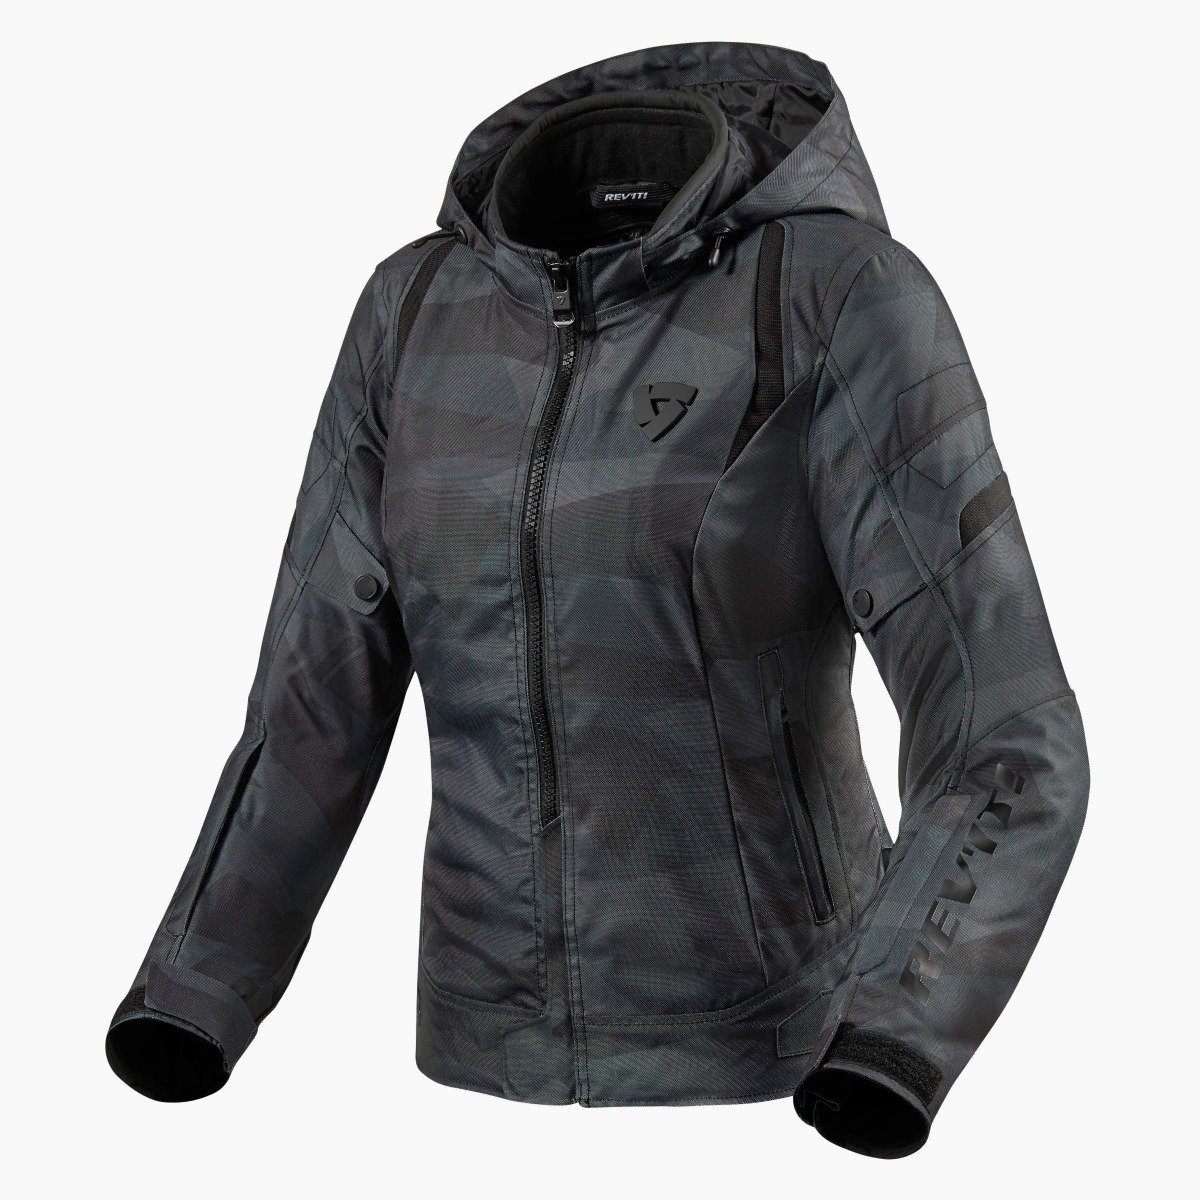 Image of REV'IT! Flare 2 Jacket Lady Camo Black Gray Size 40 EN